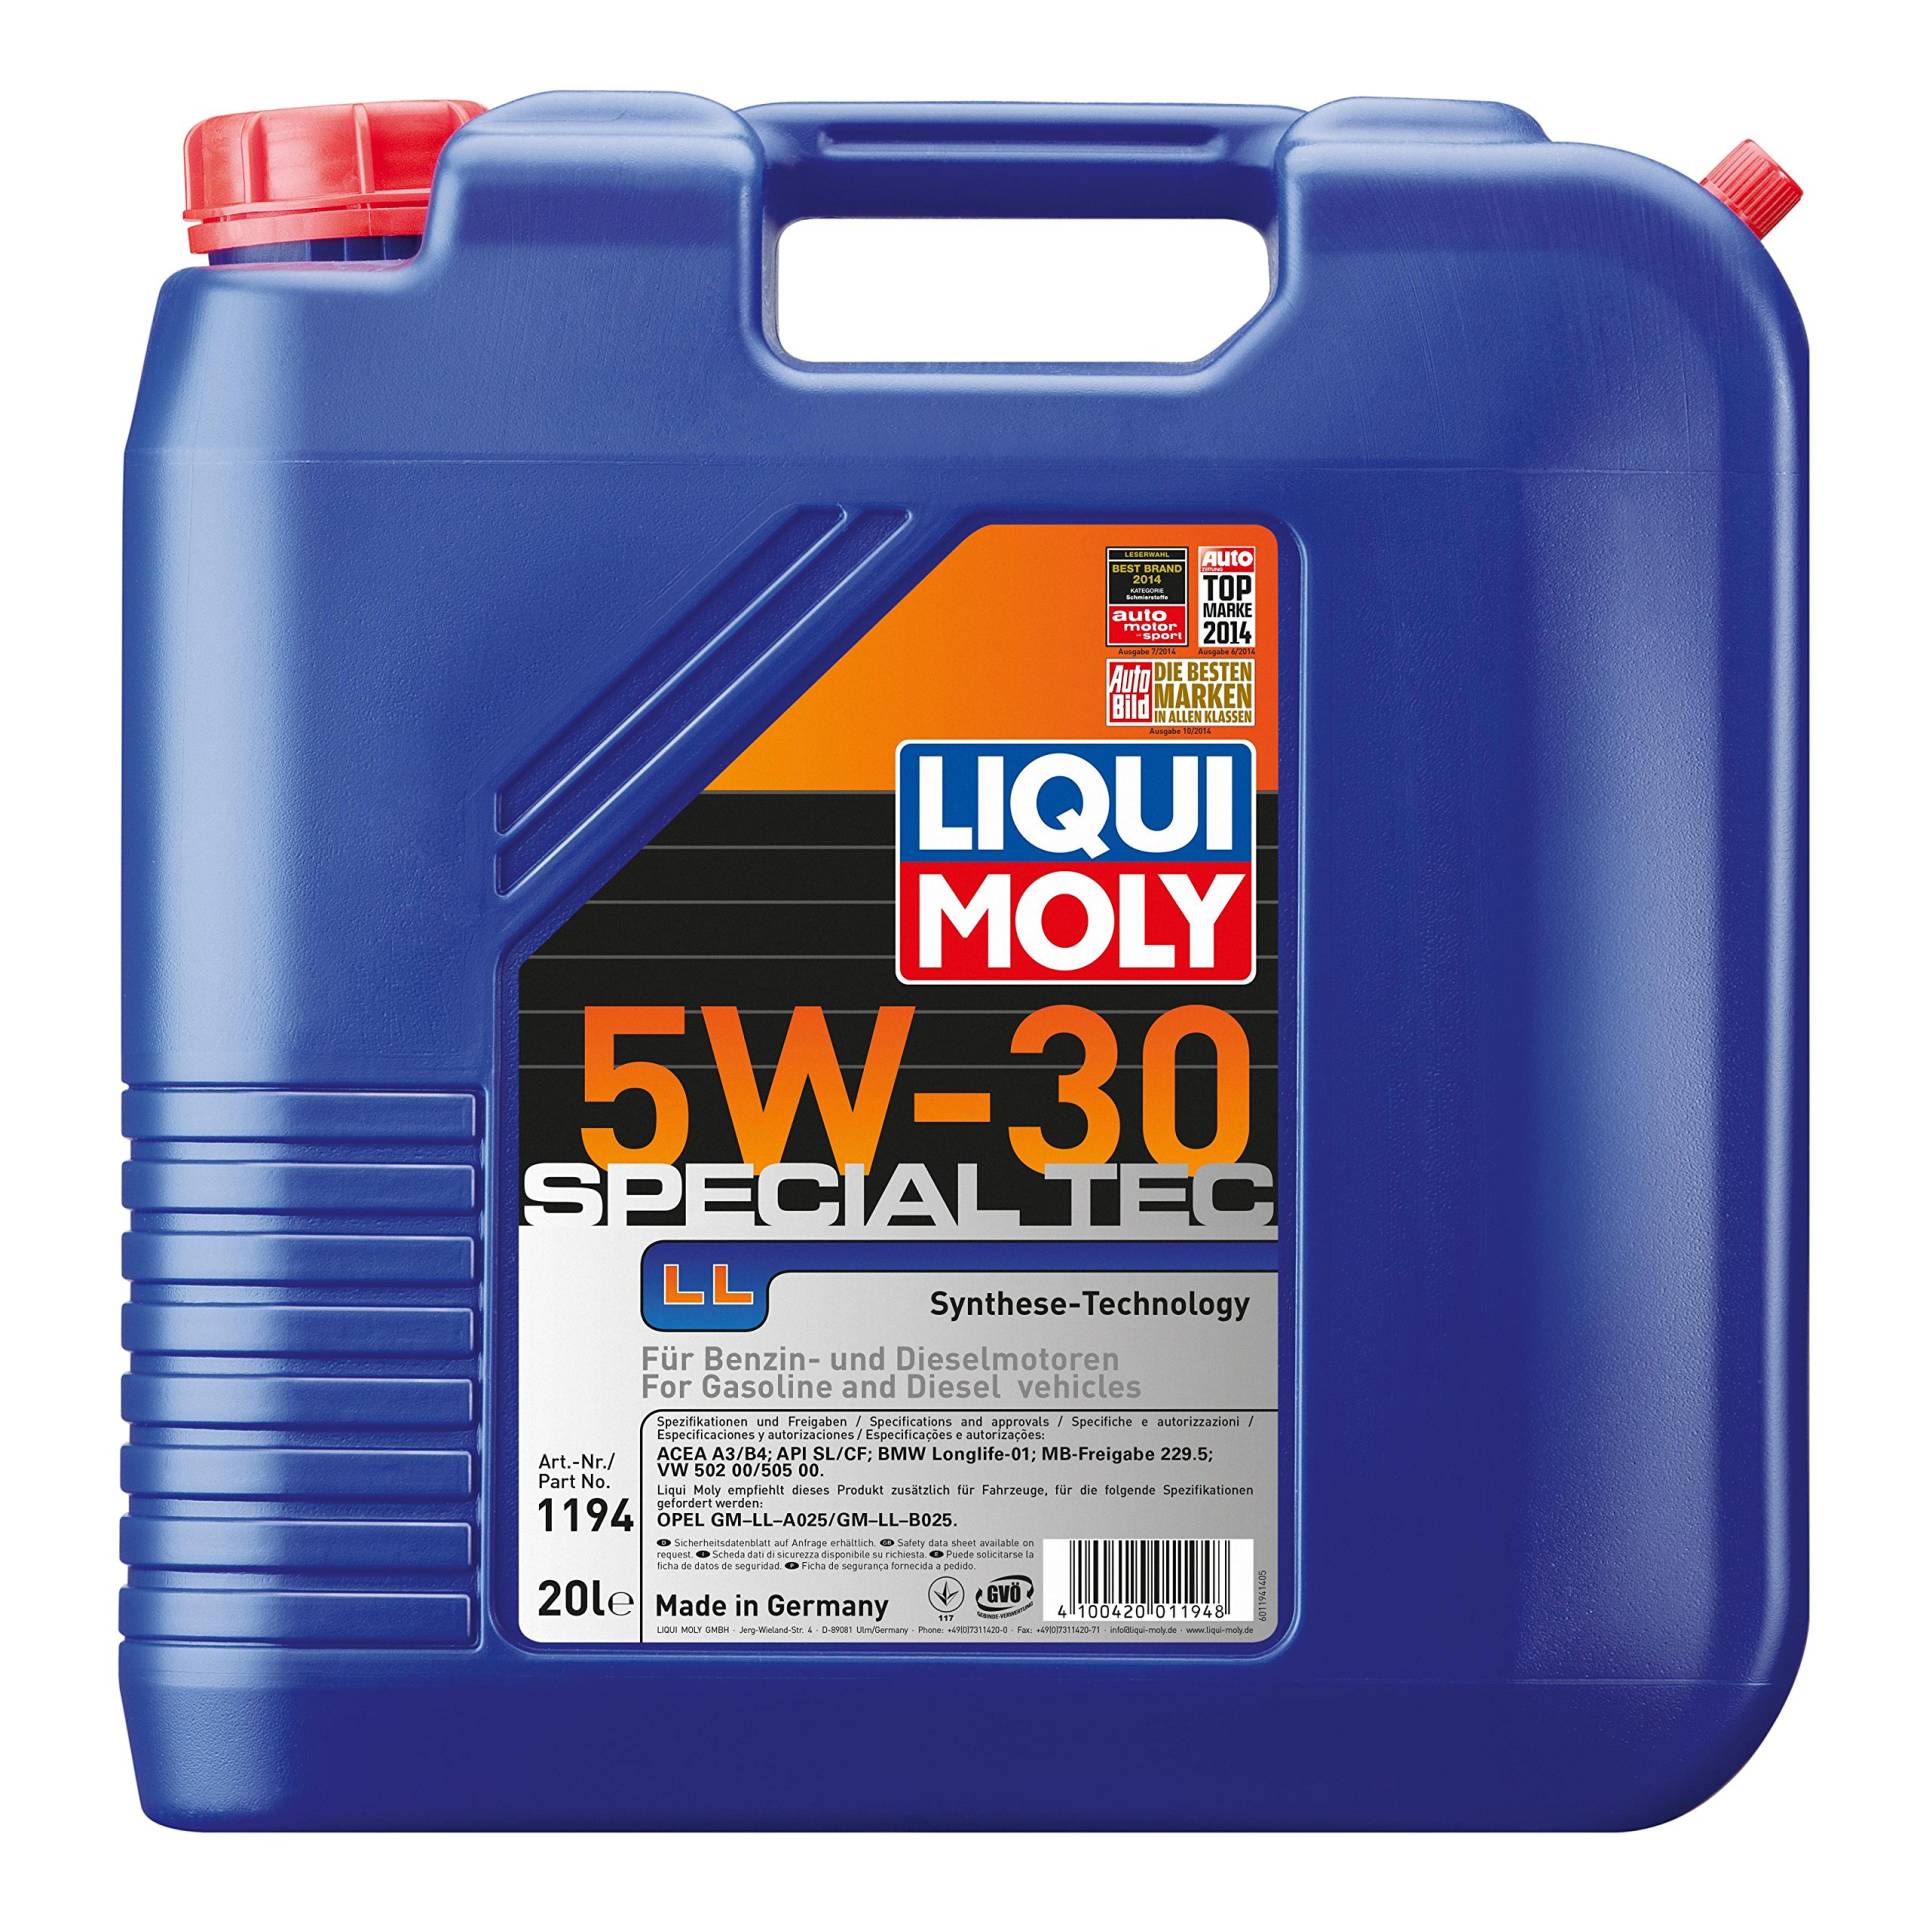 LIQUI MOLY Special Tec LL 5W-30 | 20 L | Synthesetechnologie Motoröl | Art.-Nr.: 1194 von Liqui Moly